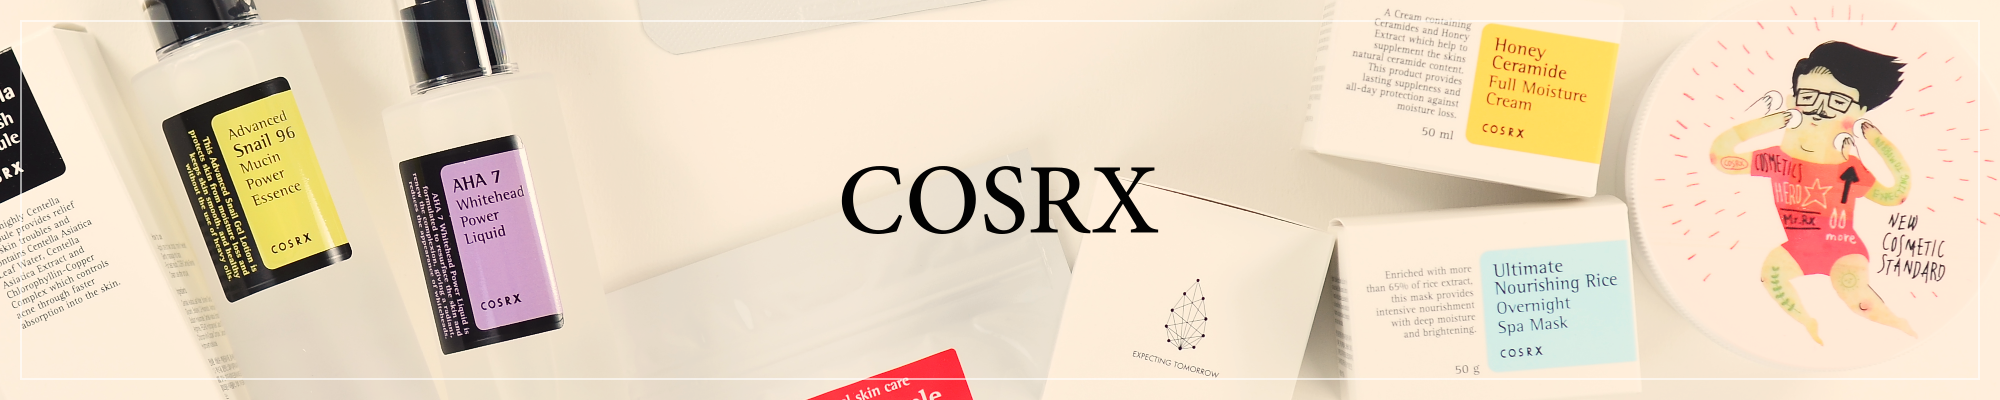 COSRX2